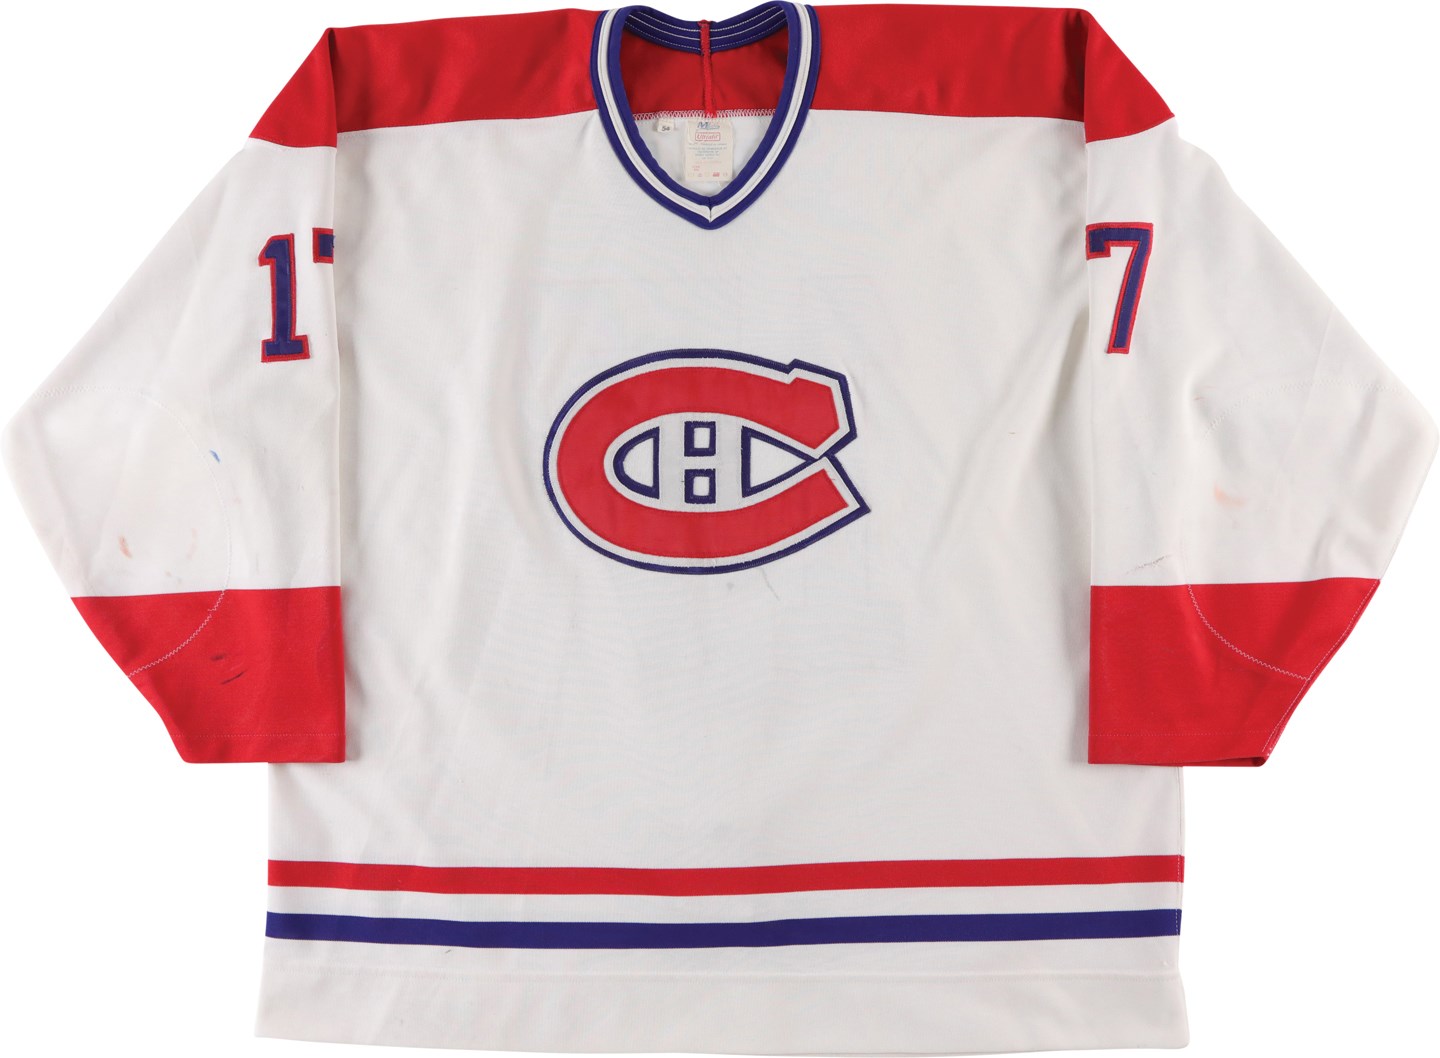 - 1993-94 John LeClair Montreal Canadiens Game Worn Jersey